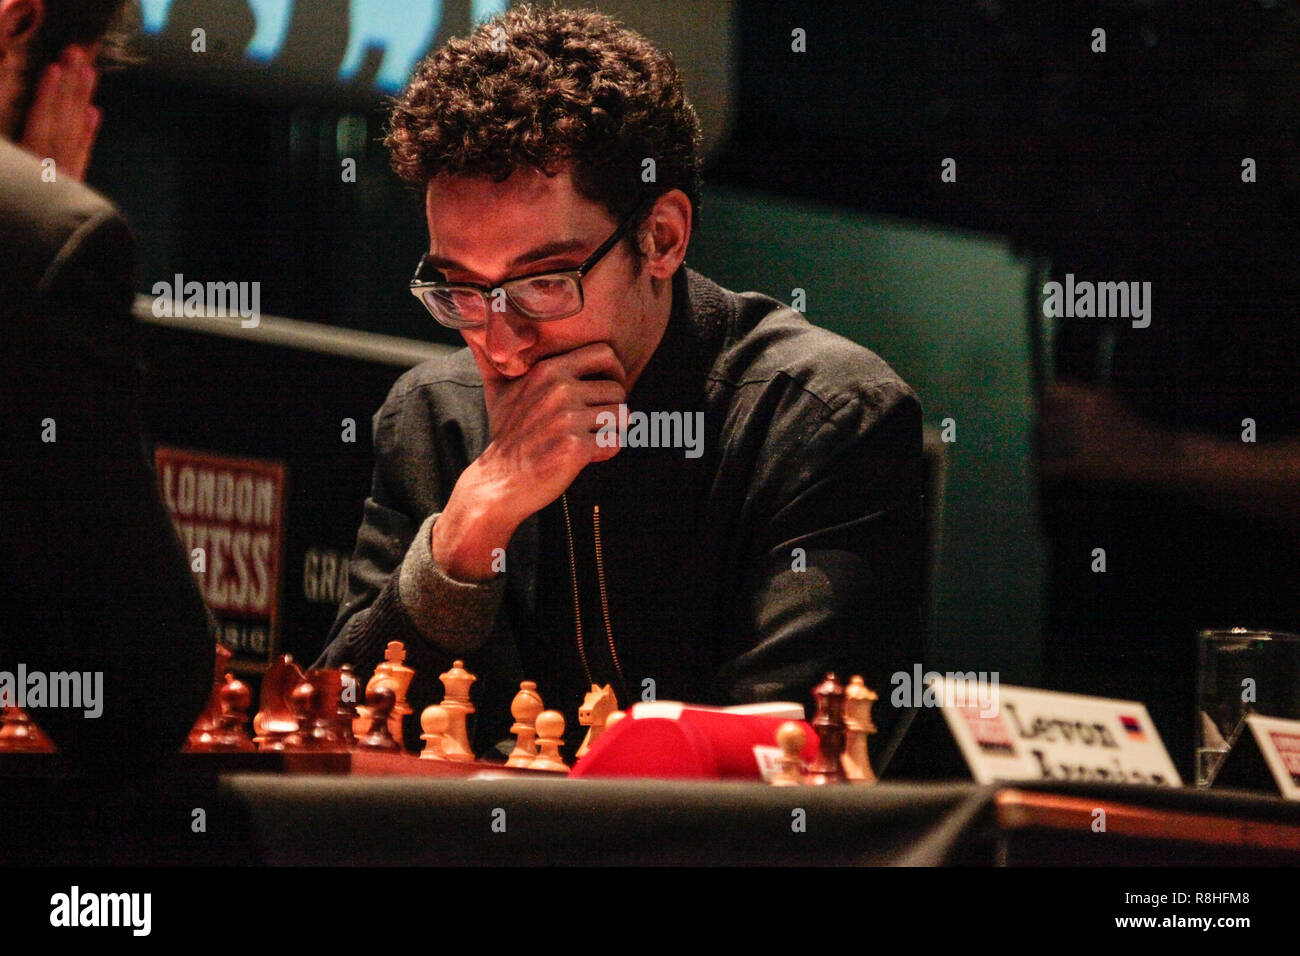 File:Fabiano Caruana 2013.jpg - Wikimedia Commons